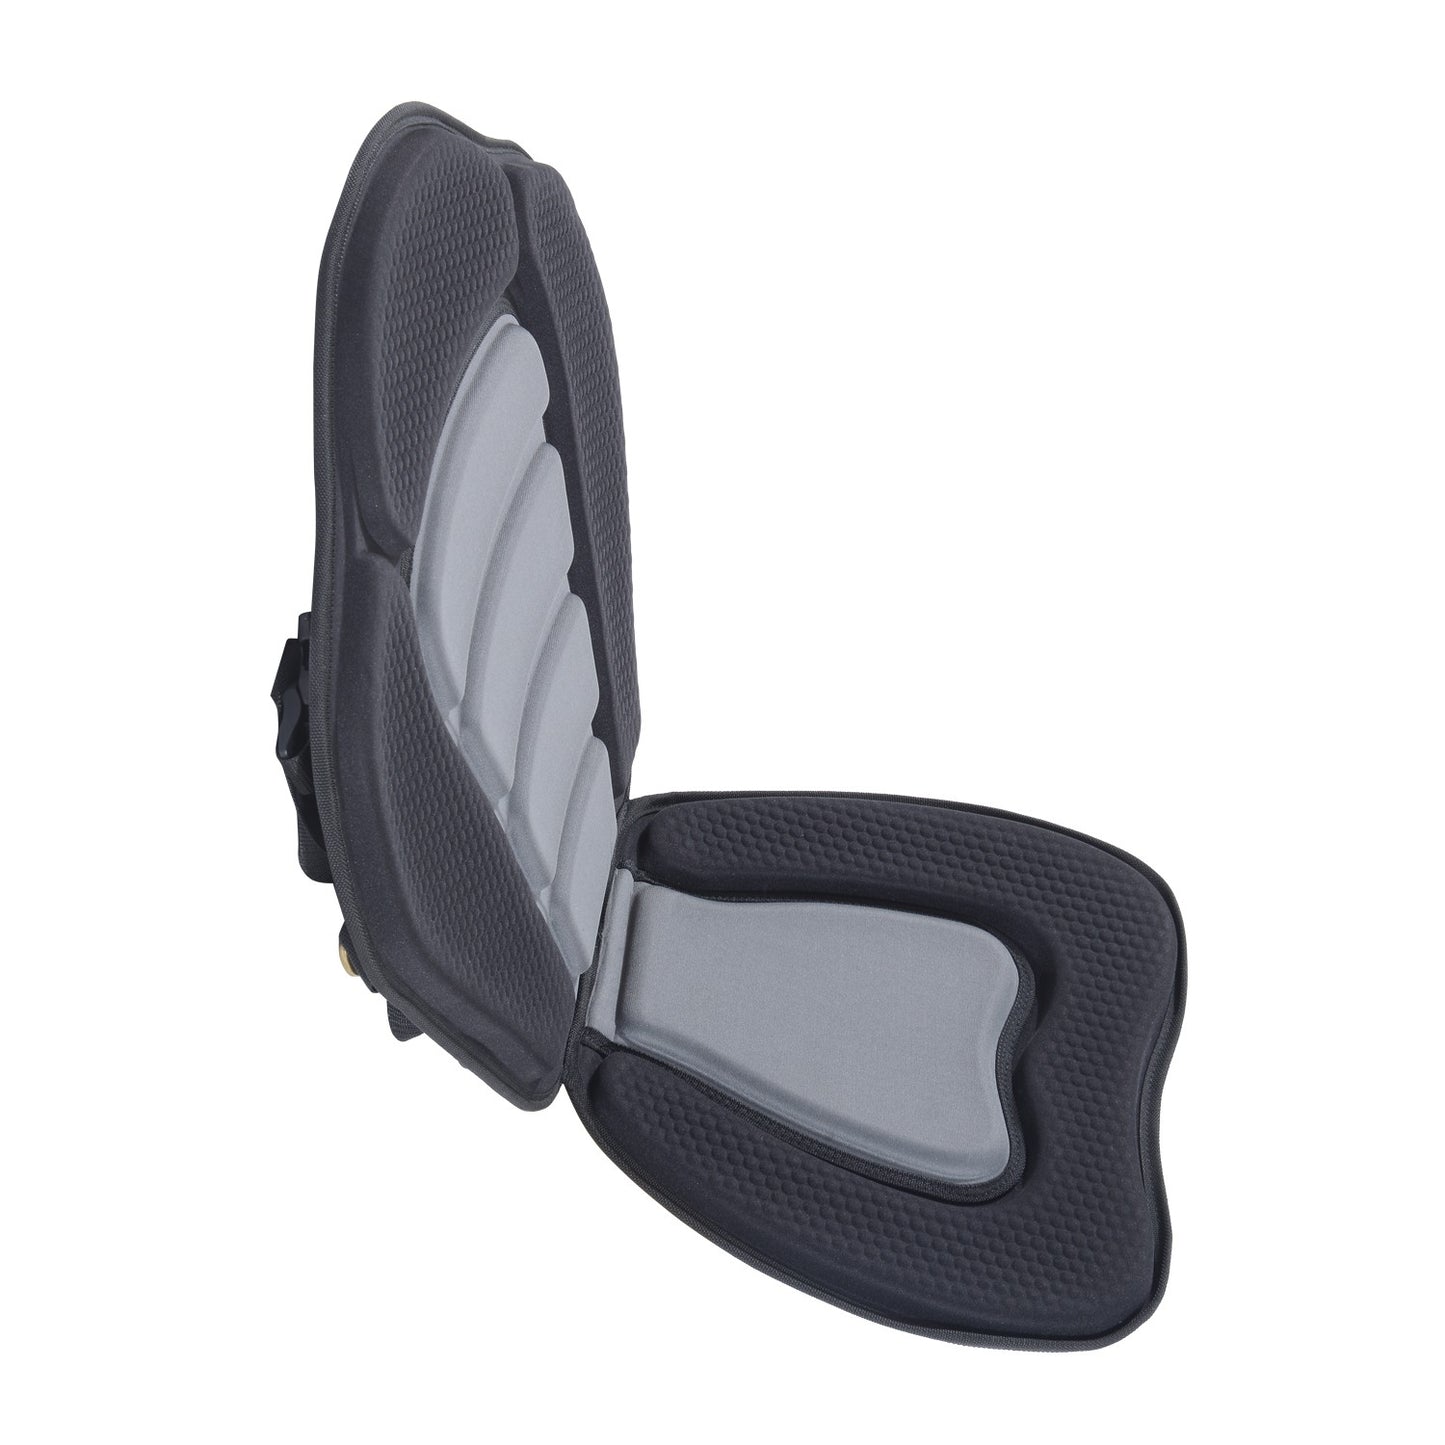 HOMCOM High Back Detachable Canoe/Kayak Seat-Black